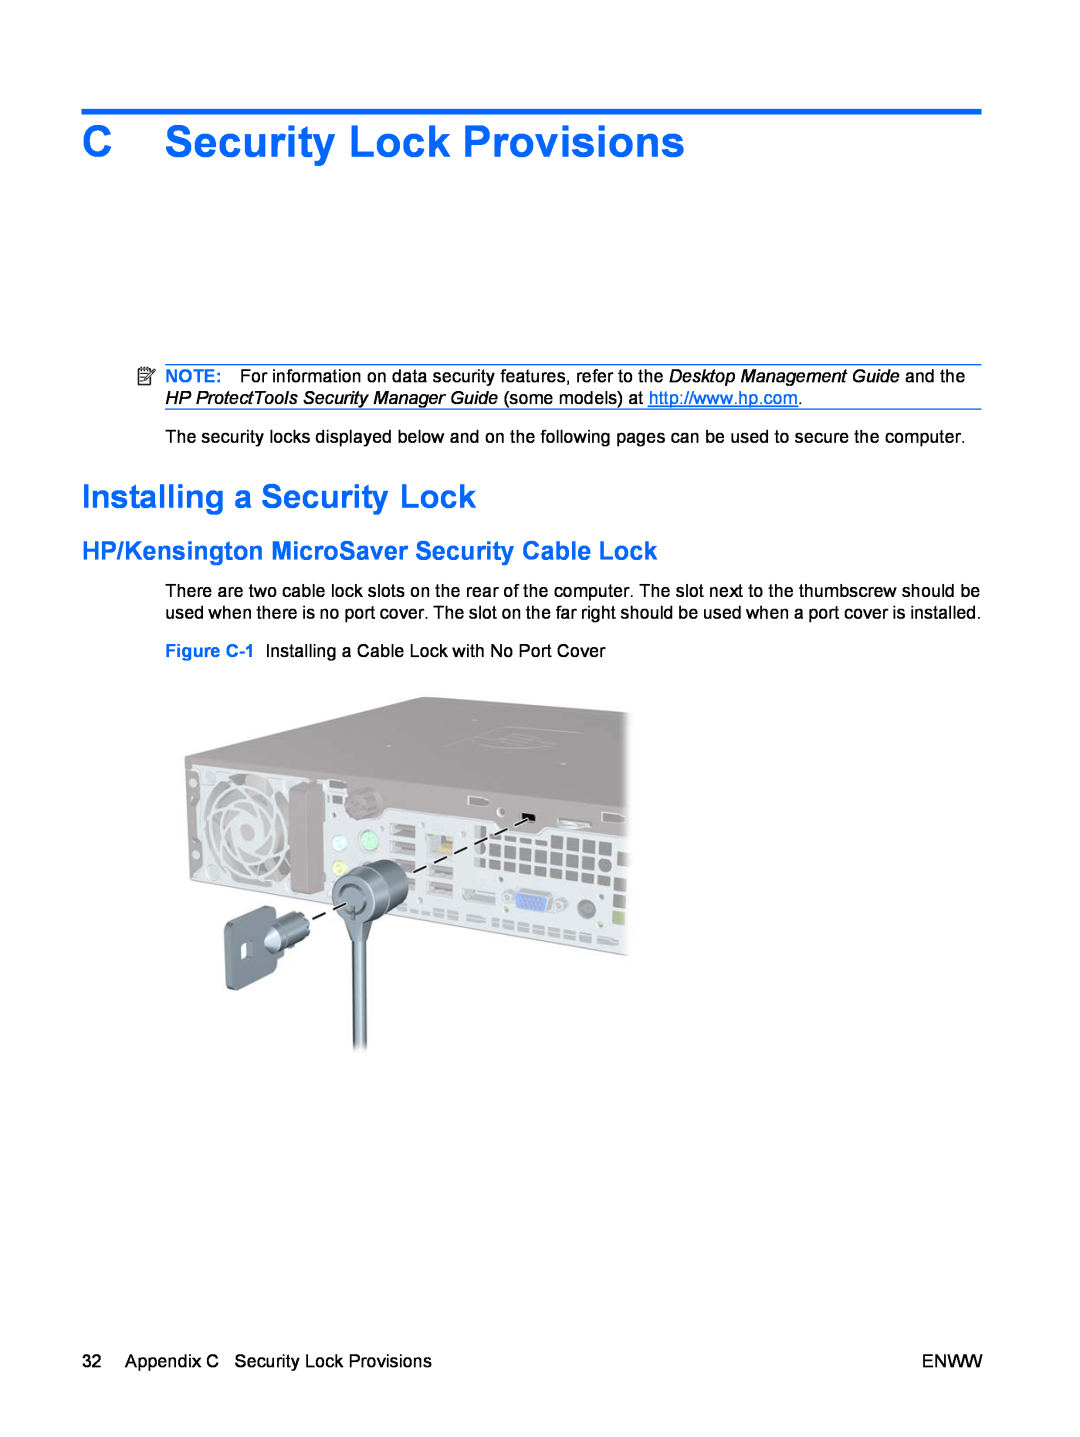 Hitachi 8000 manual C Security Lock Provisions, Installing a Security Lock, HP/Kensington MicroSaver Security Cable Lock 